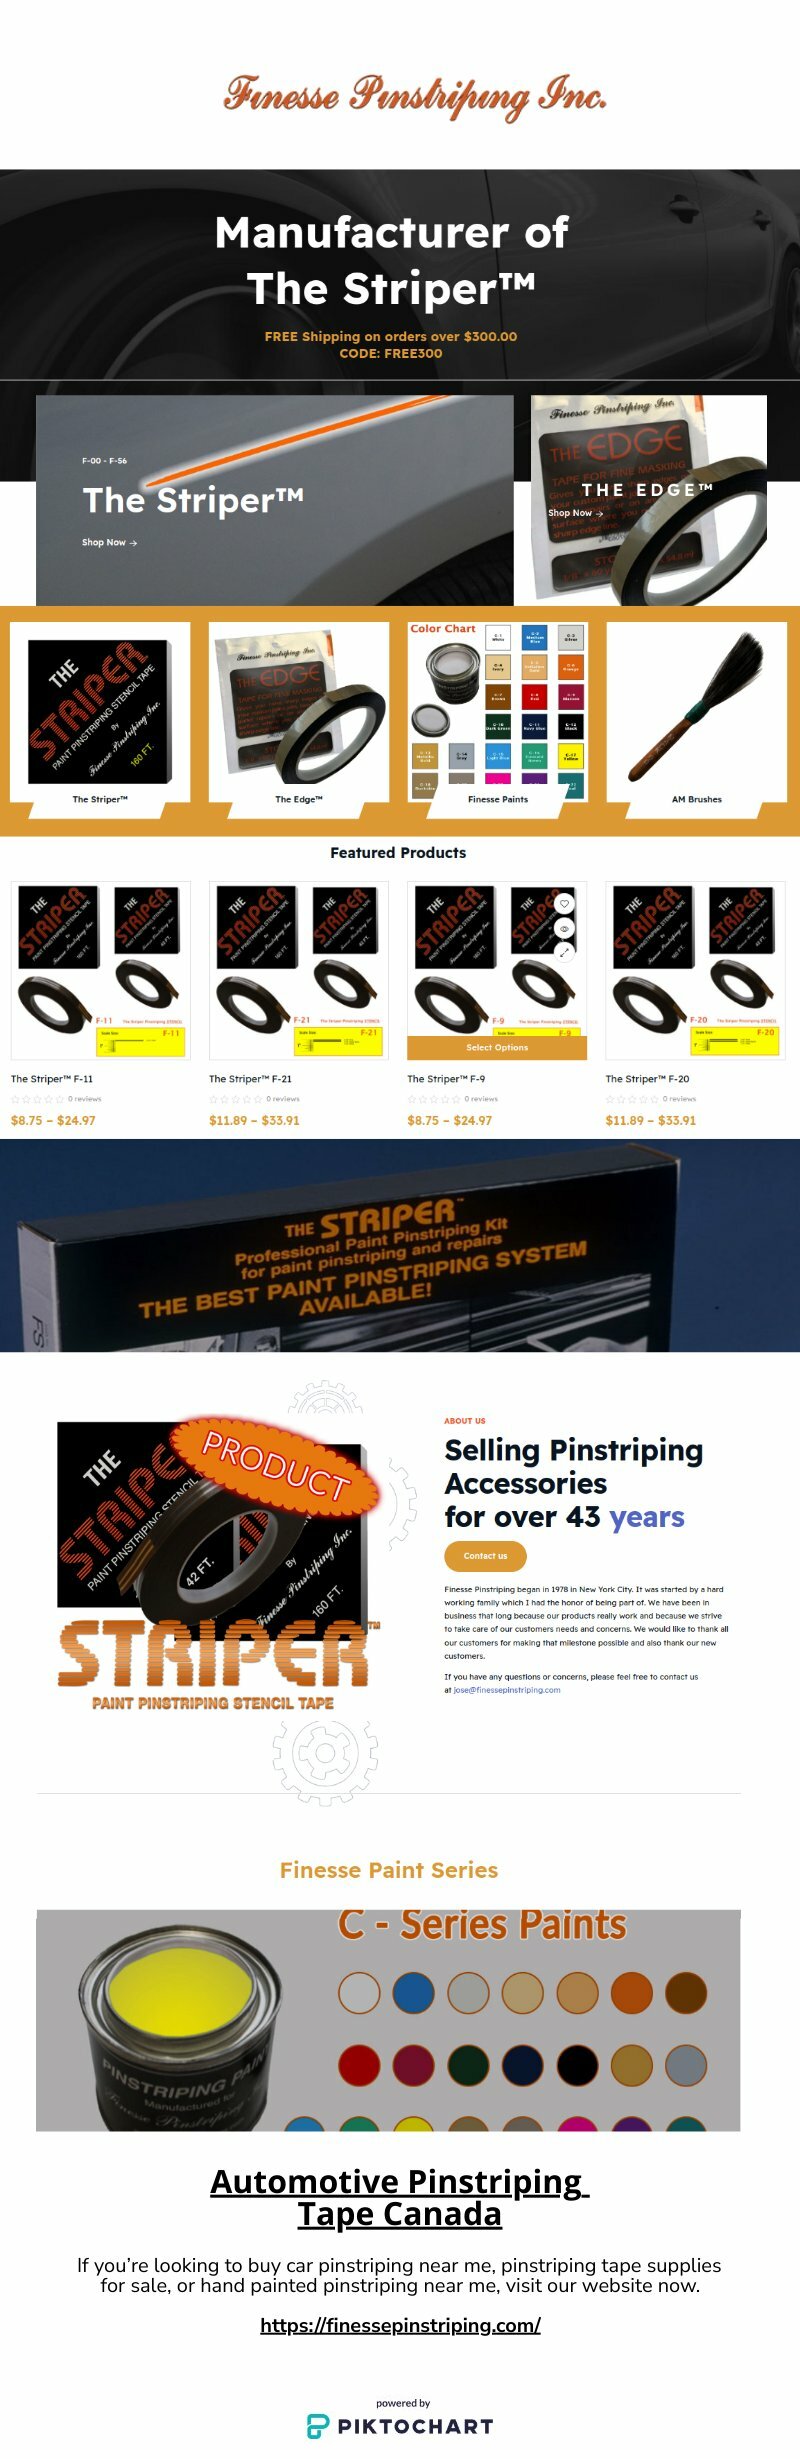 Automotive Pinstriping Tape Canada | Piktochart Visual Editor